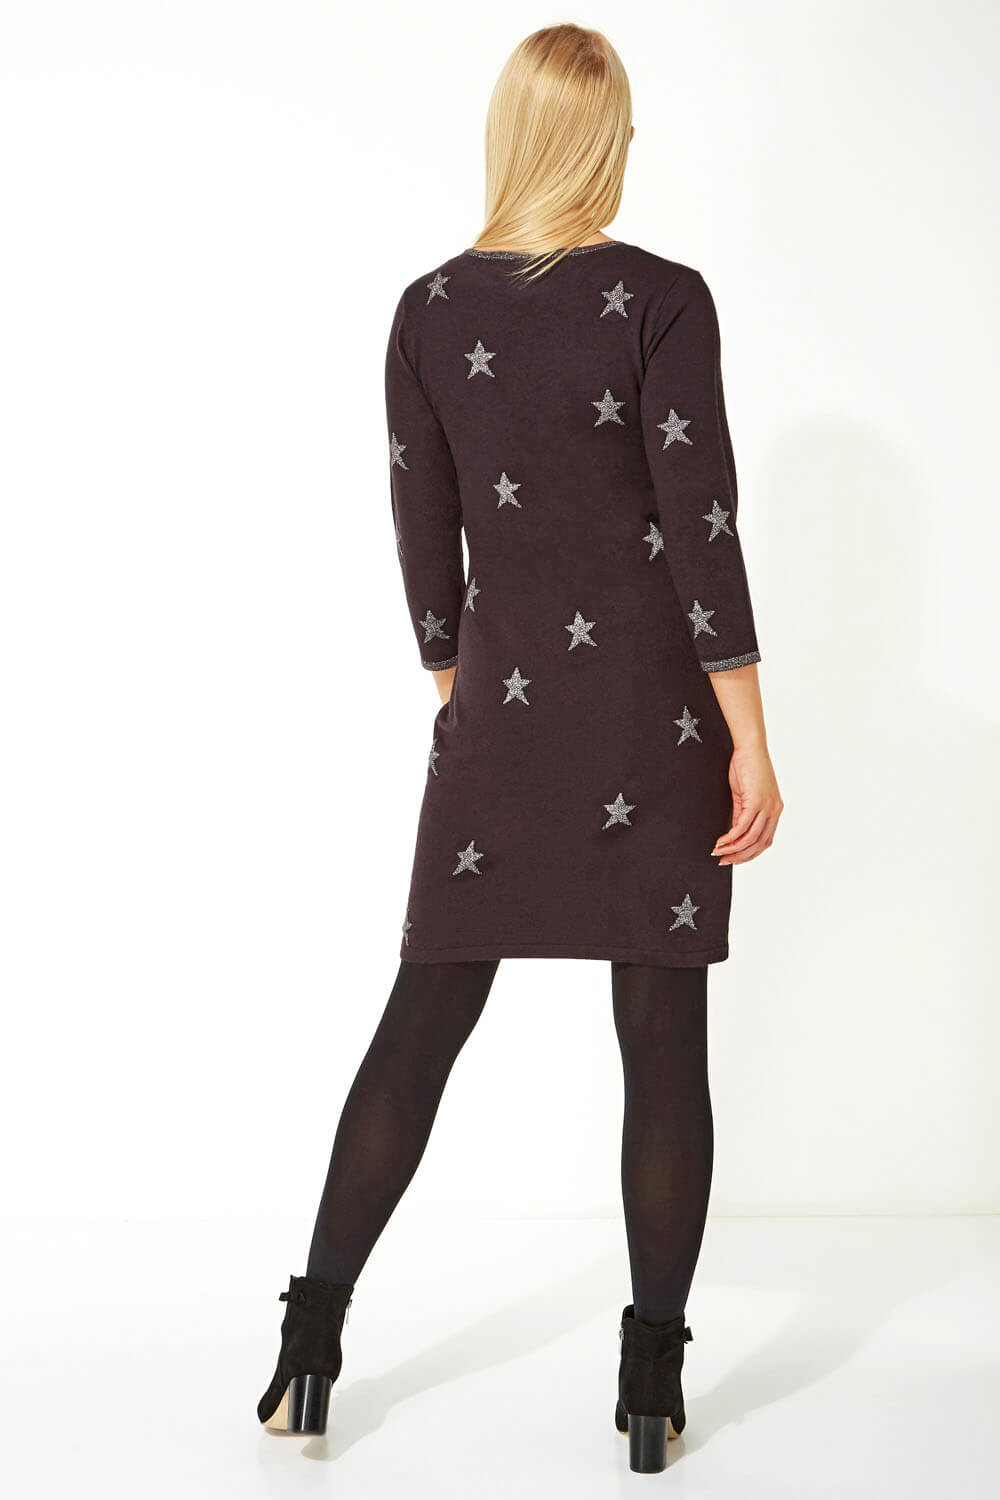 Grey Metallic Star Knitted Dress, Image 3 of 6